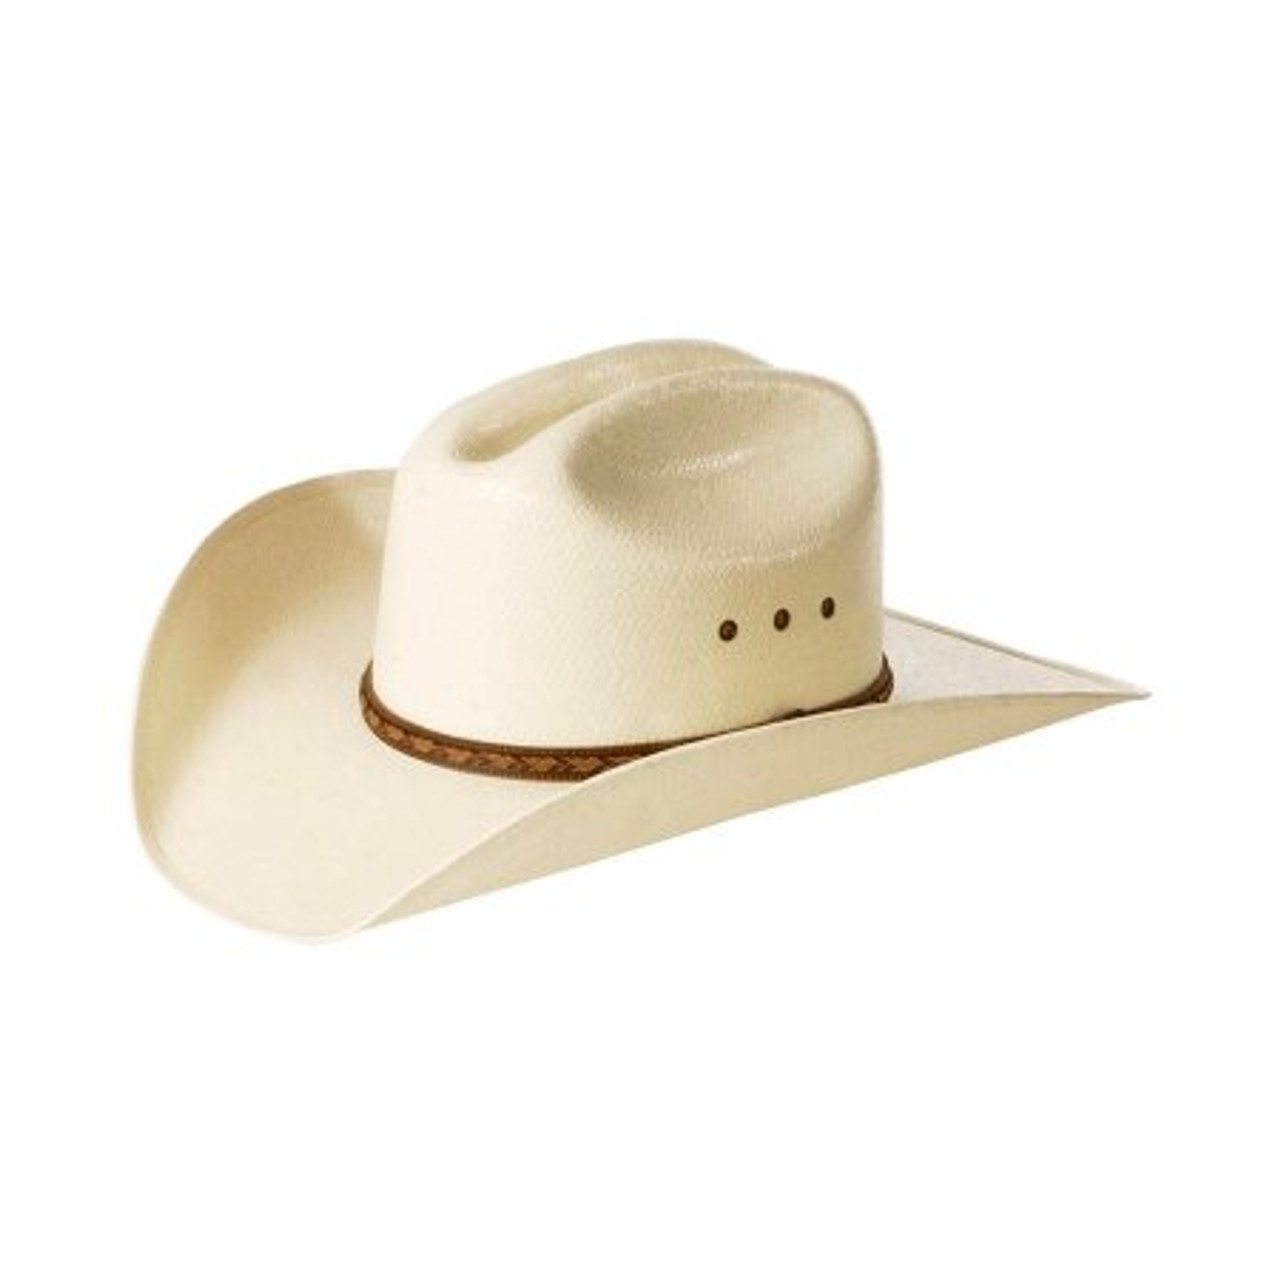 Straw Sombrero Cowboy Hat | 50X Straw Ventilated Western Hat (S102)